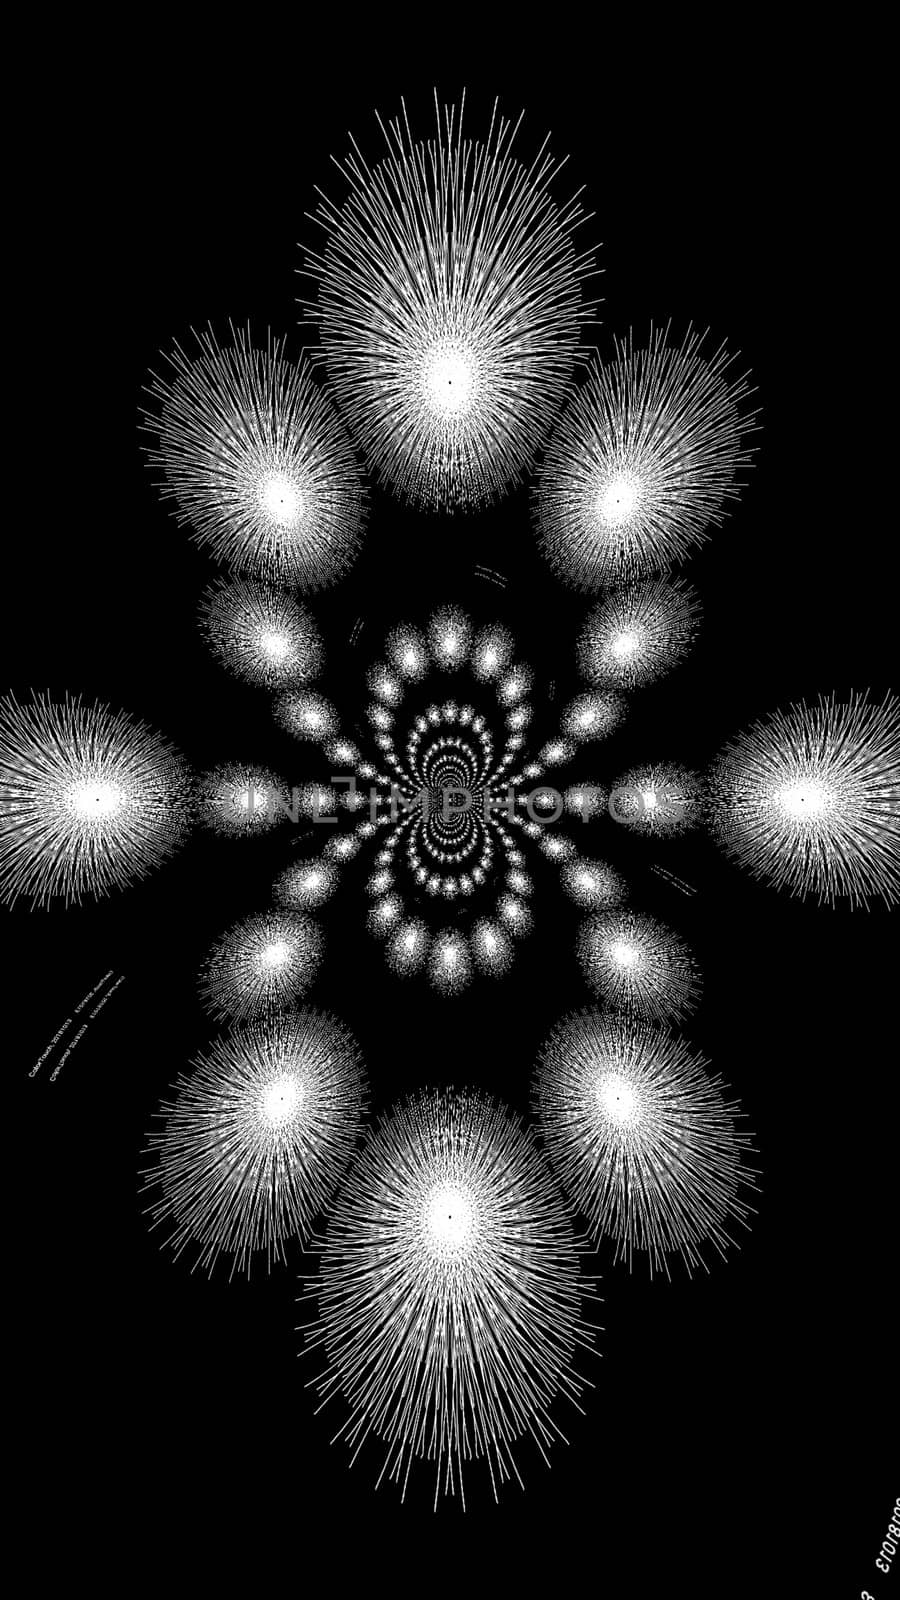 White pattern Design in black background by ravindrabhu165165@gmail.com